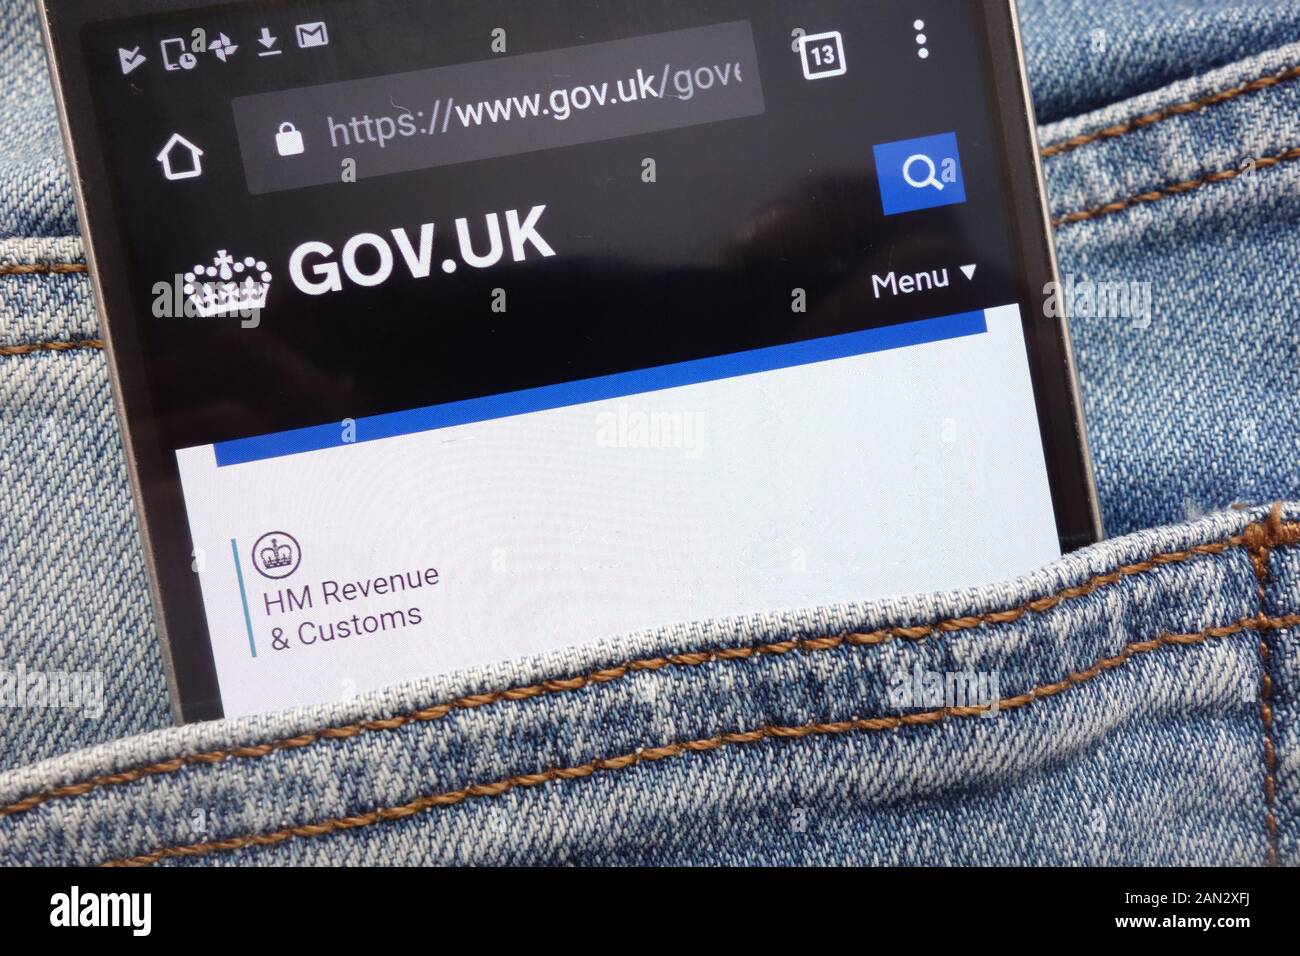 Gov.uk website displayed on smartphone hidden in jeans pocket Stock Photo